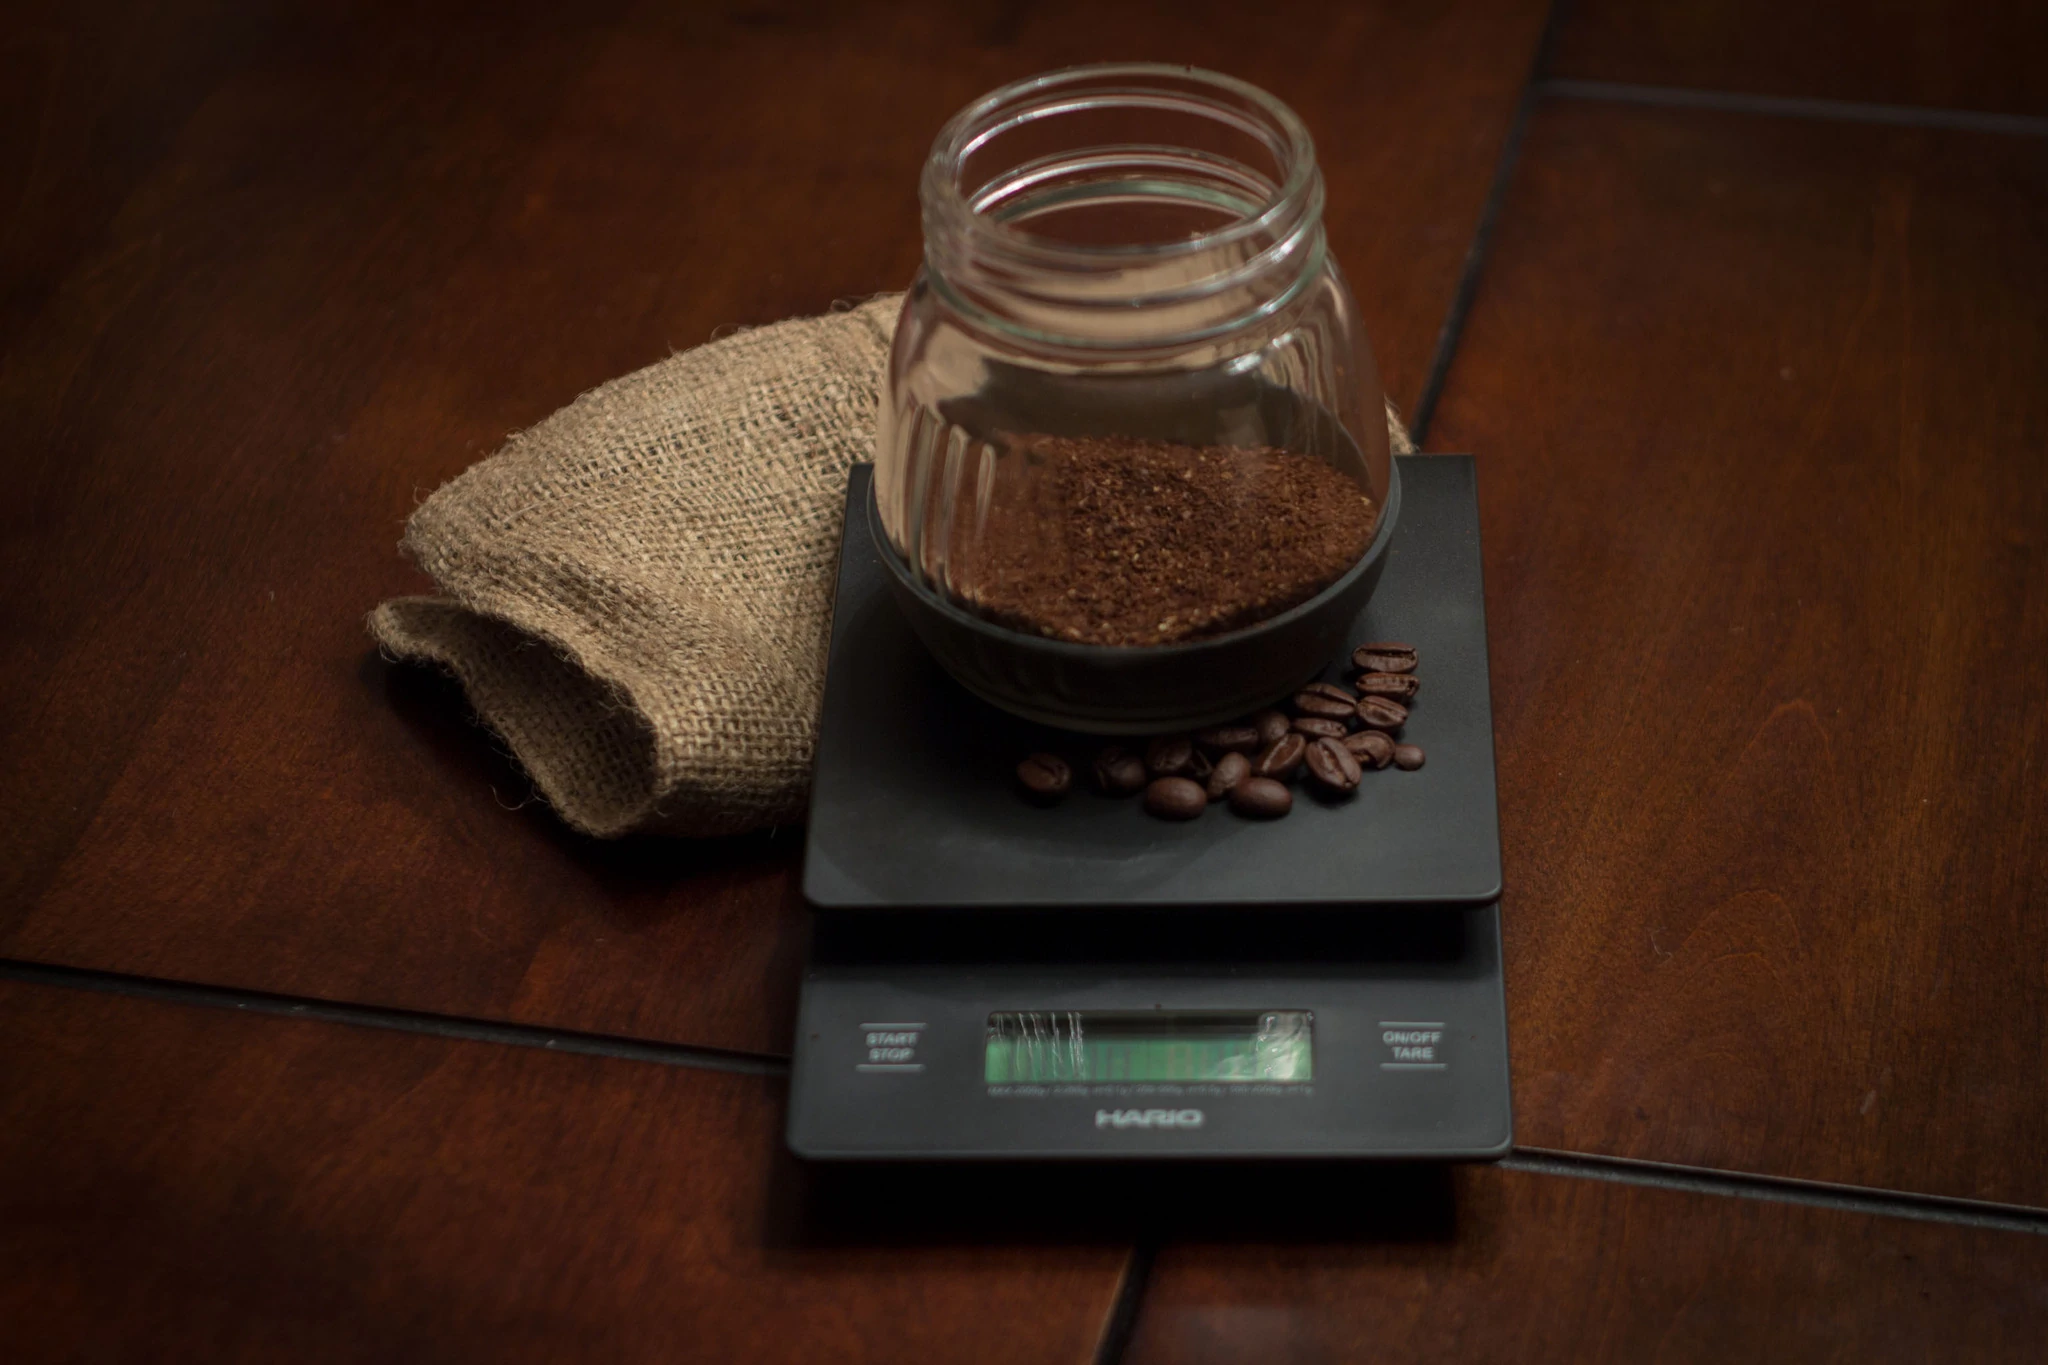 Hario V60 Drip Coffee Scale - Black